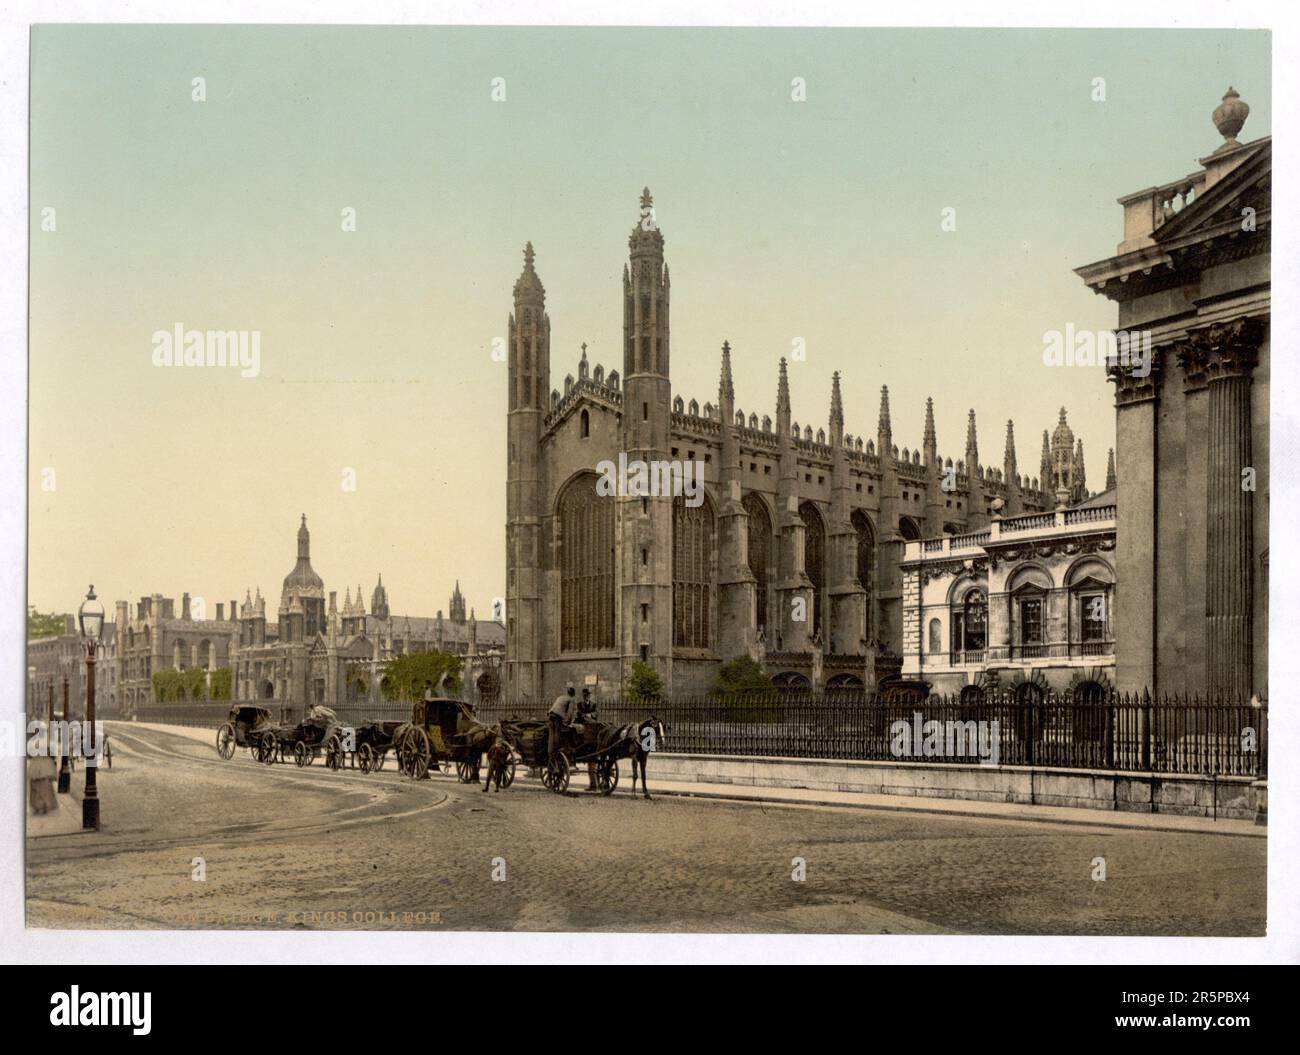 Photochrom prints, Color, 1900, 1890, King's College, Cambridge, England Stock Photo